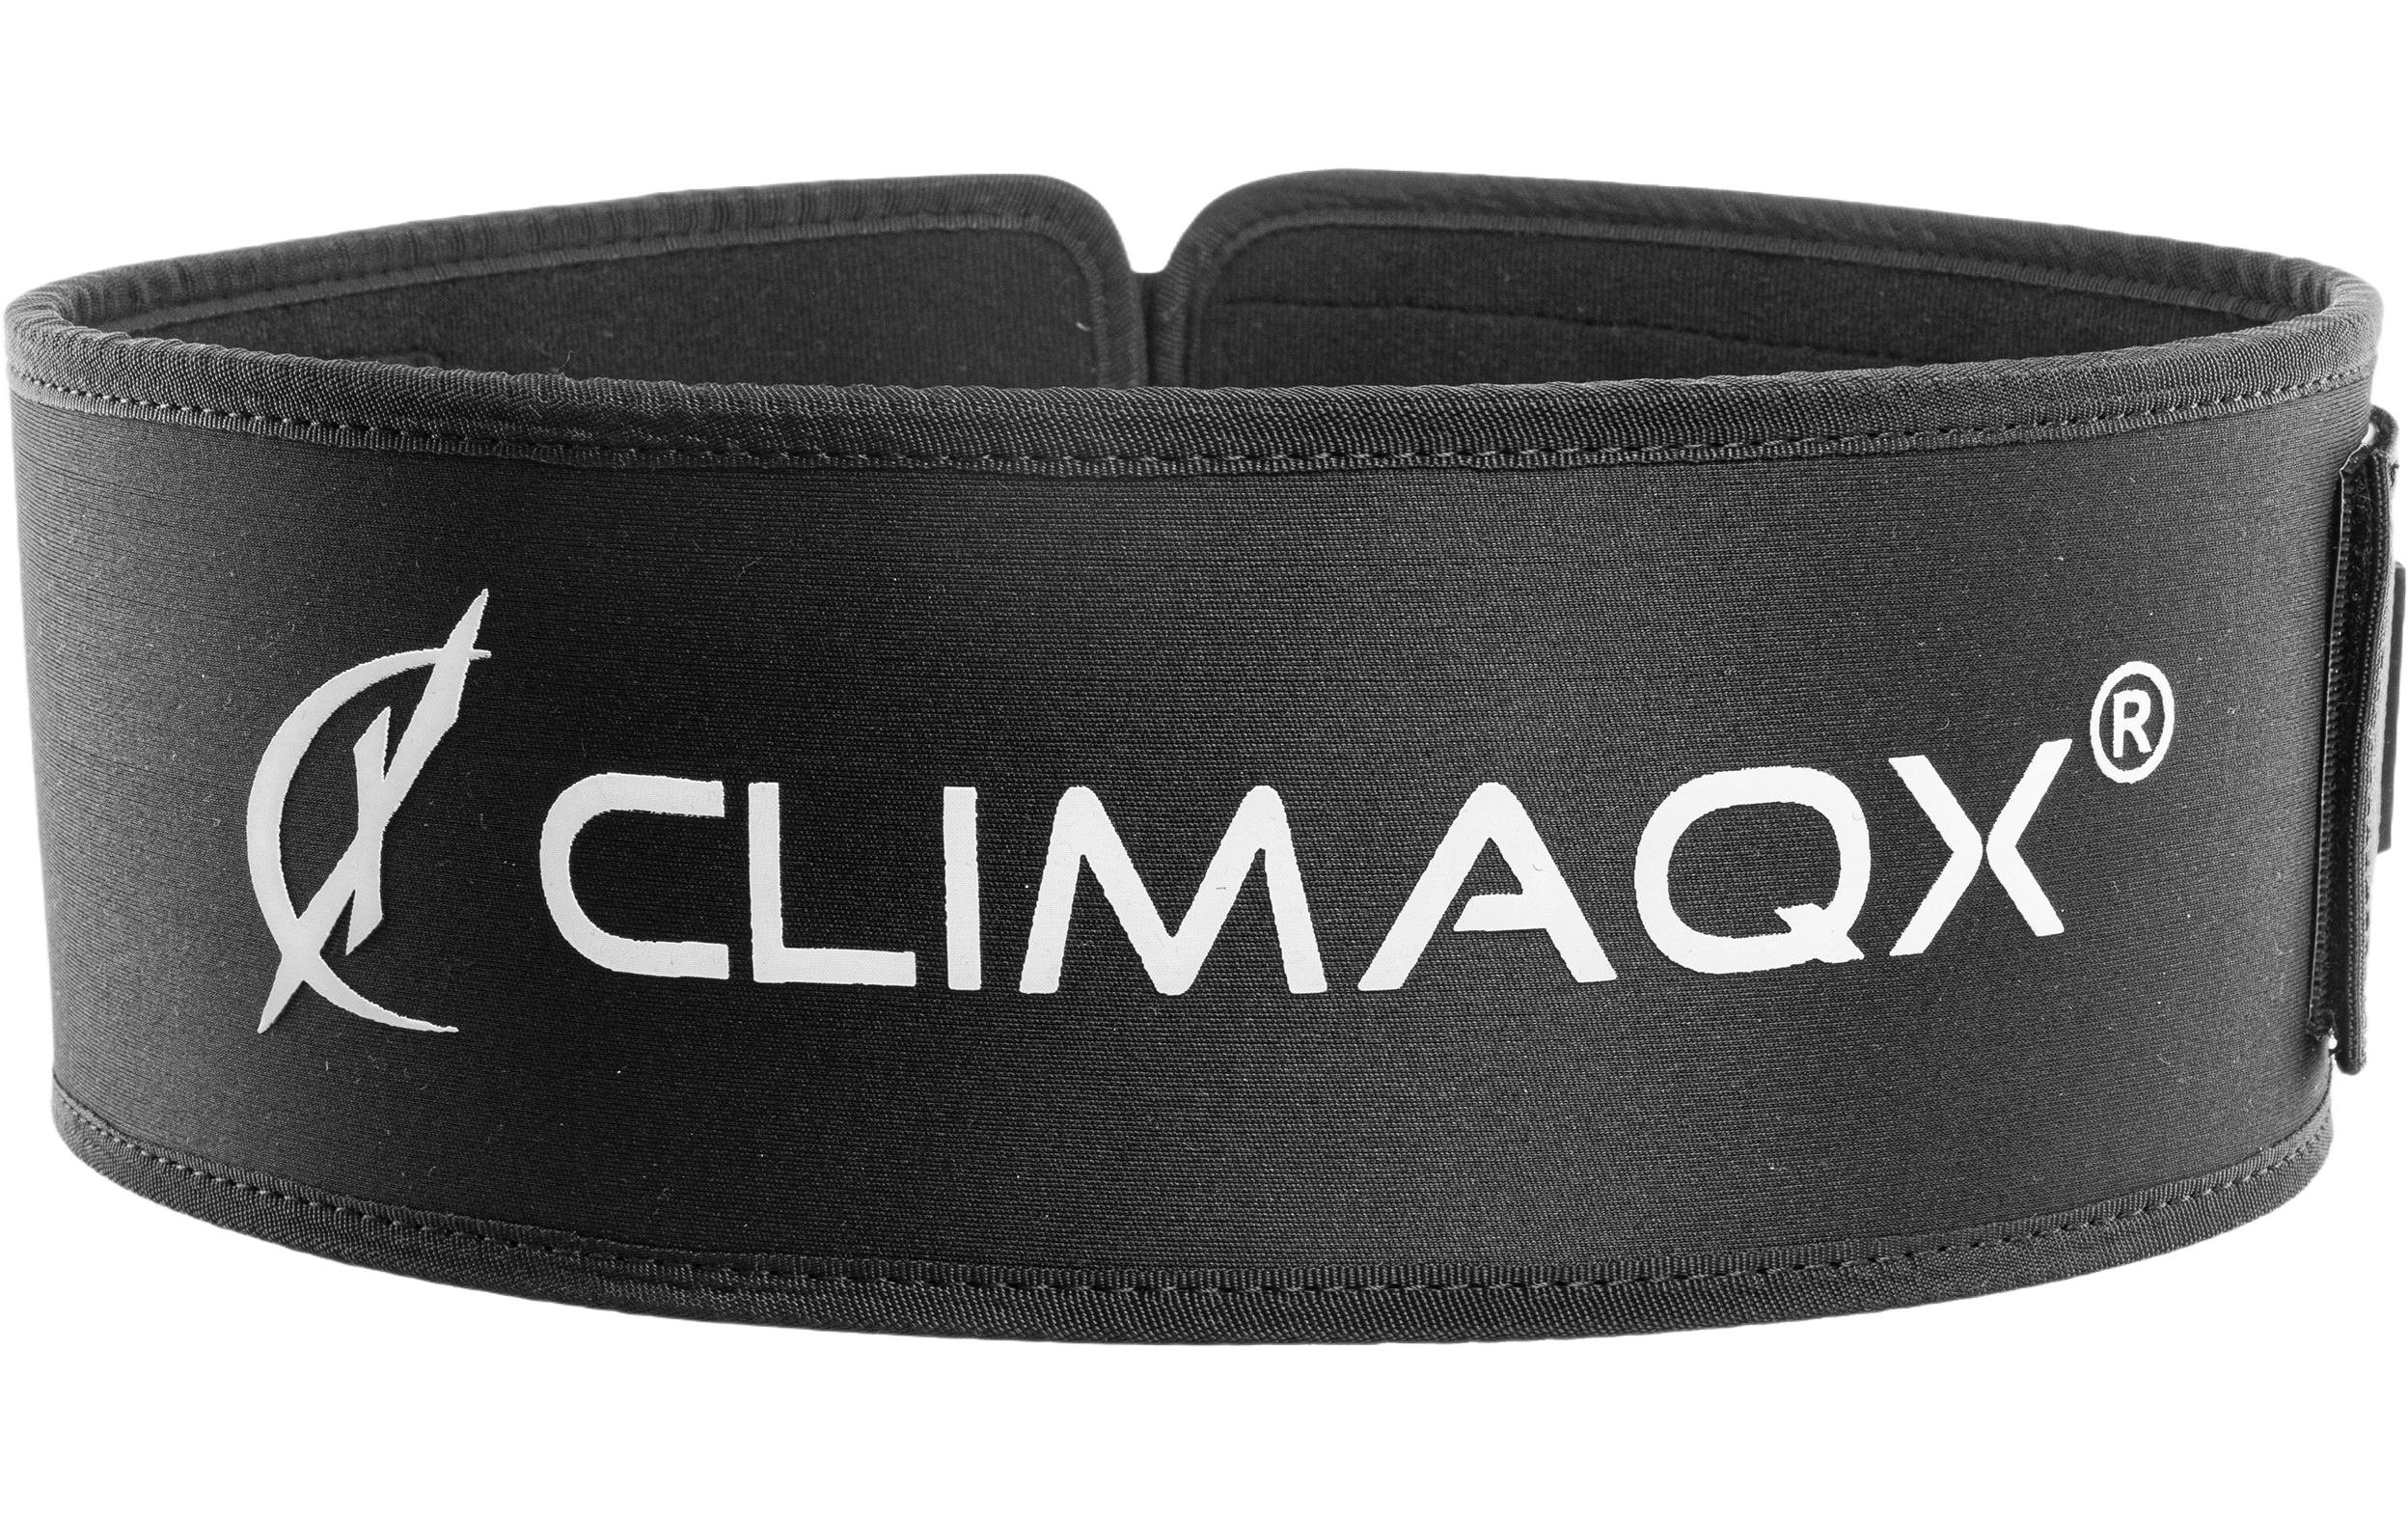 Climaqx Evolution Lifting Belt XS